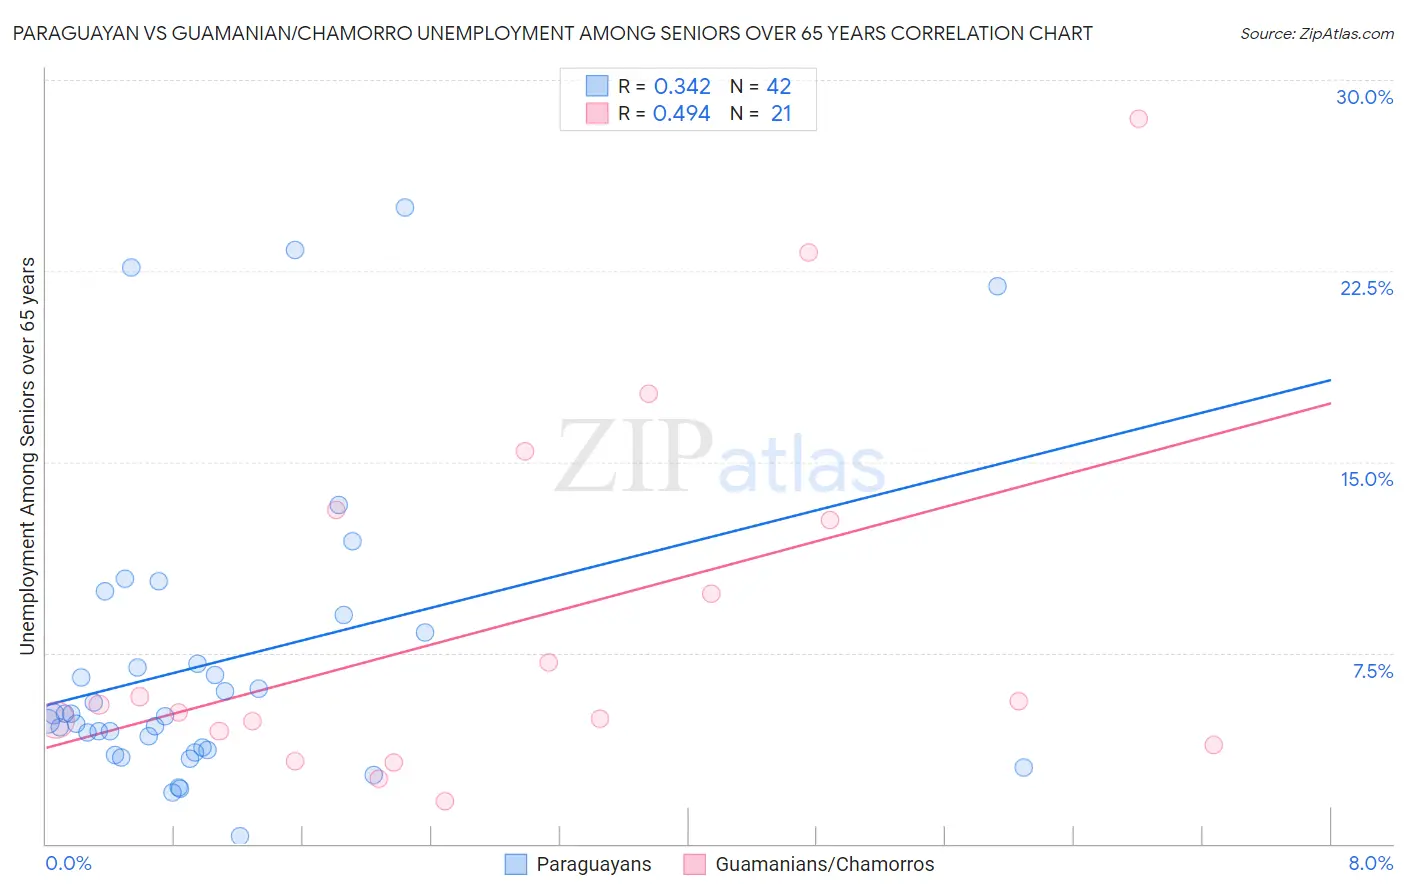 Paraguayan vs Guamanian/Chamorro Unemployment Among Seniors over 65 years